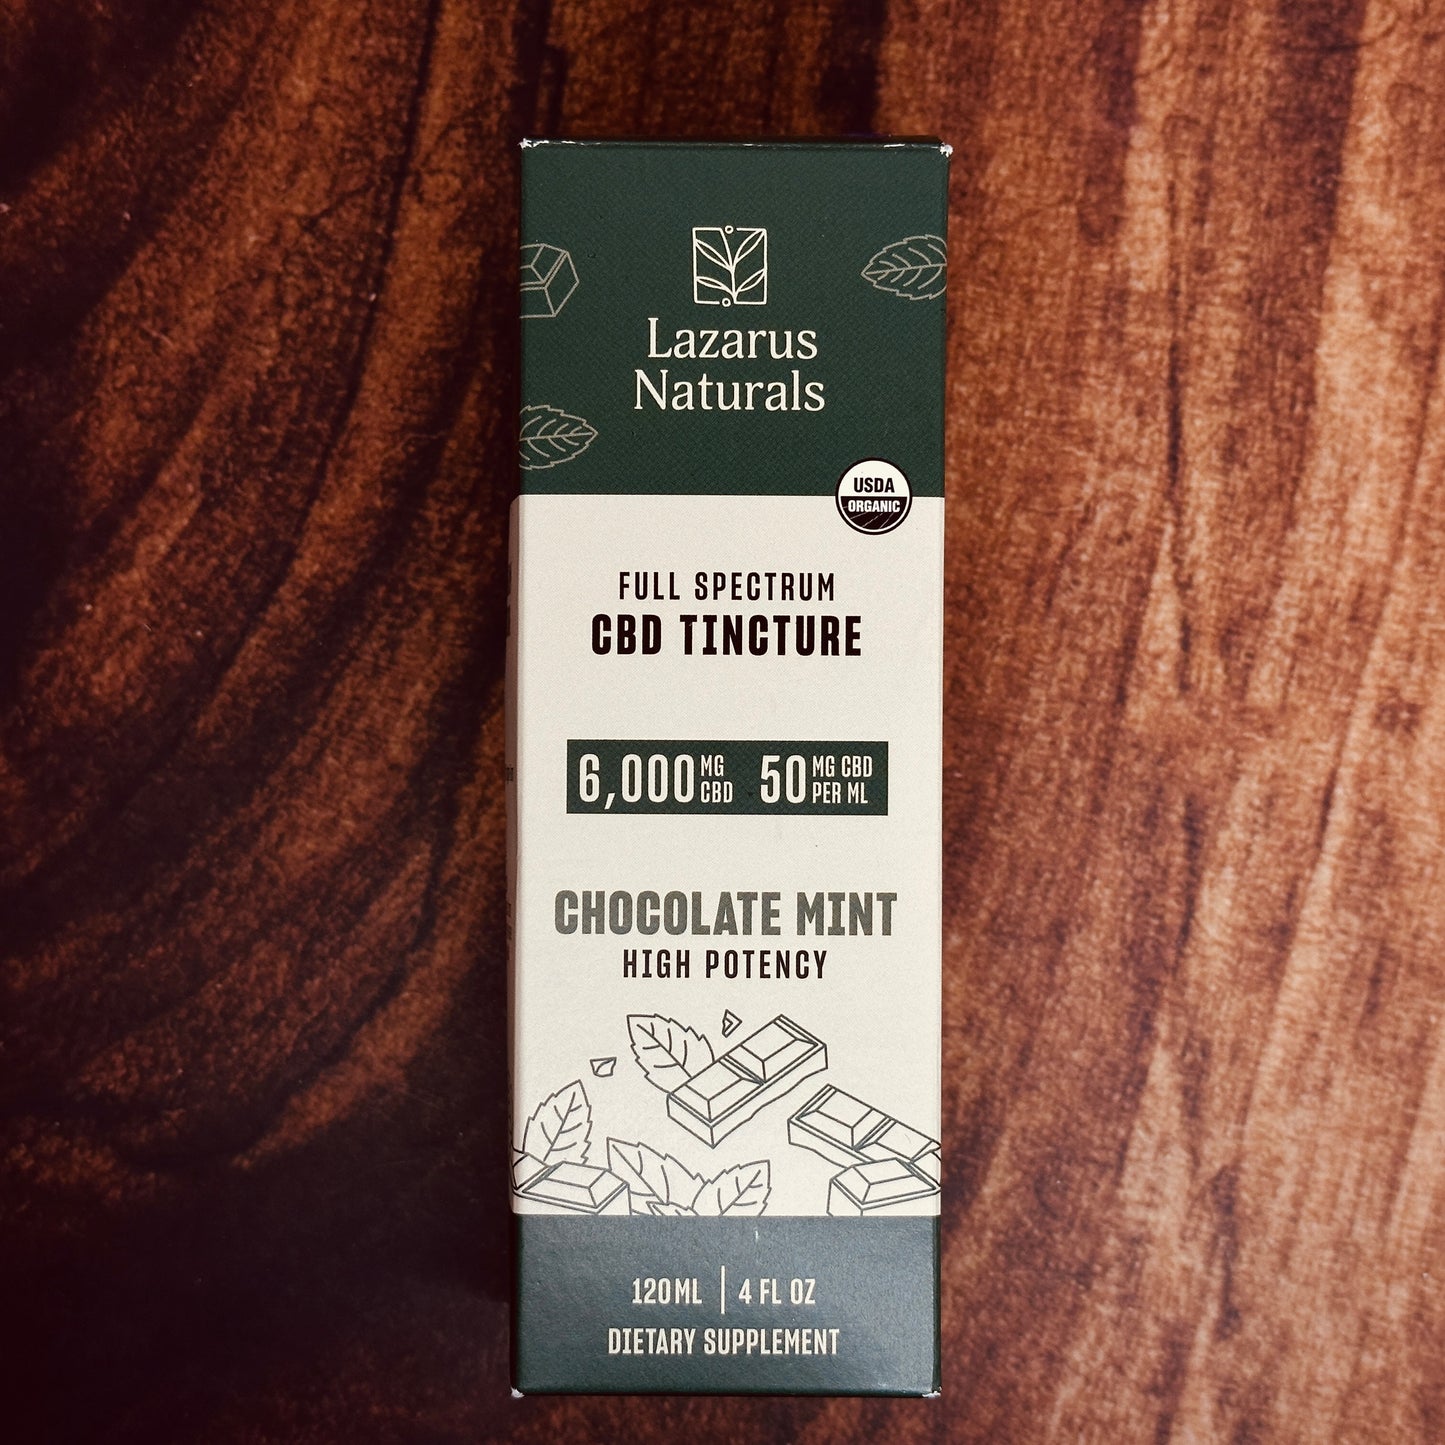 Lazarus Naturals Full Spectrum High Potency Chocolate Mint CBD Tincture